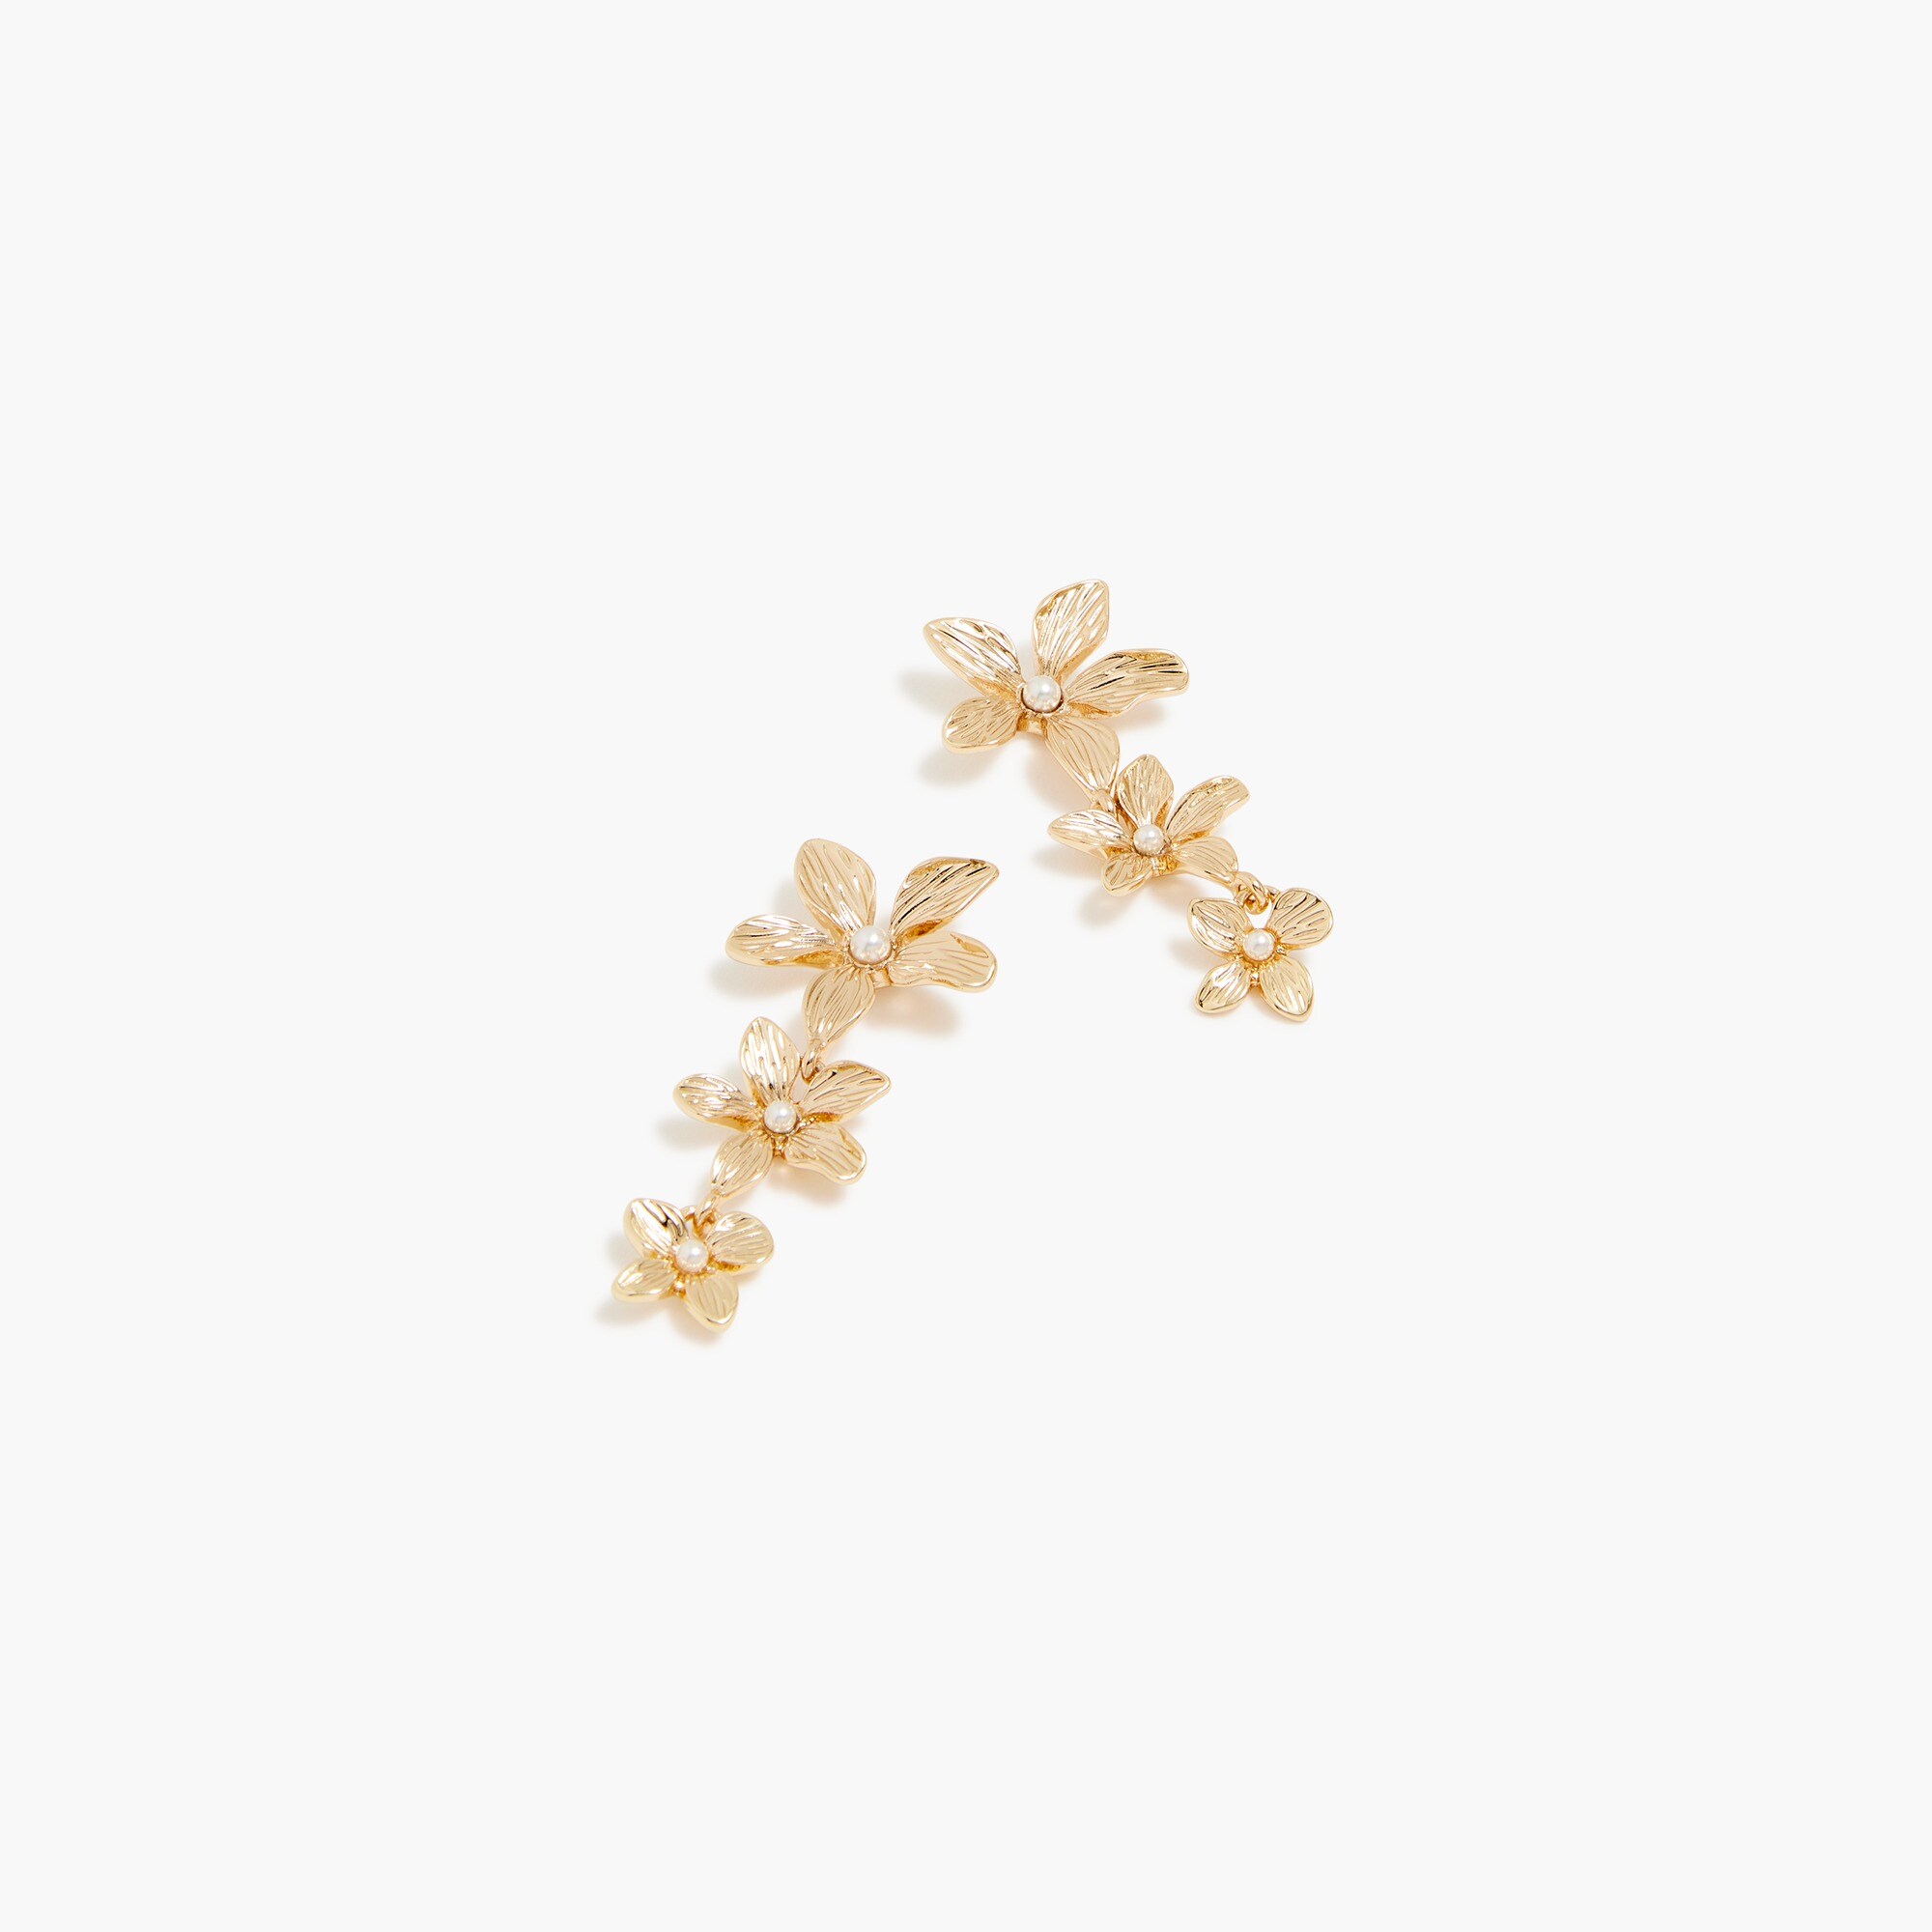  Gold floral drop earrings